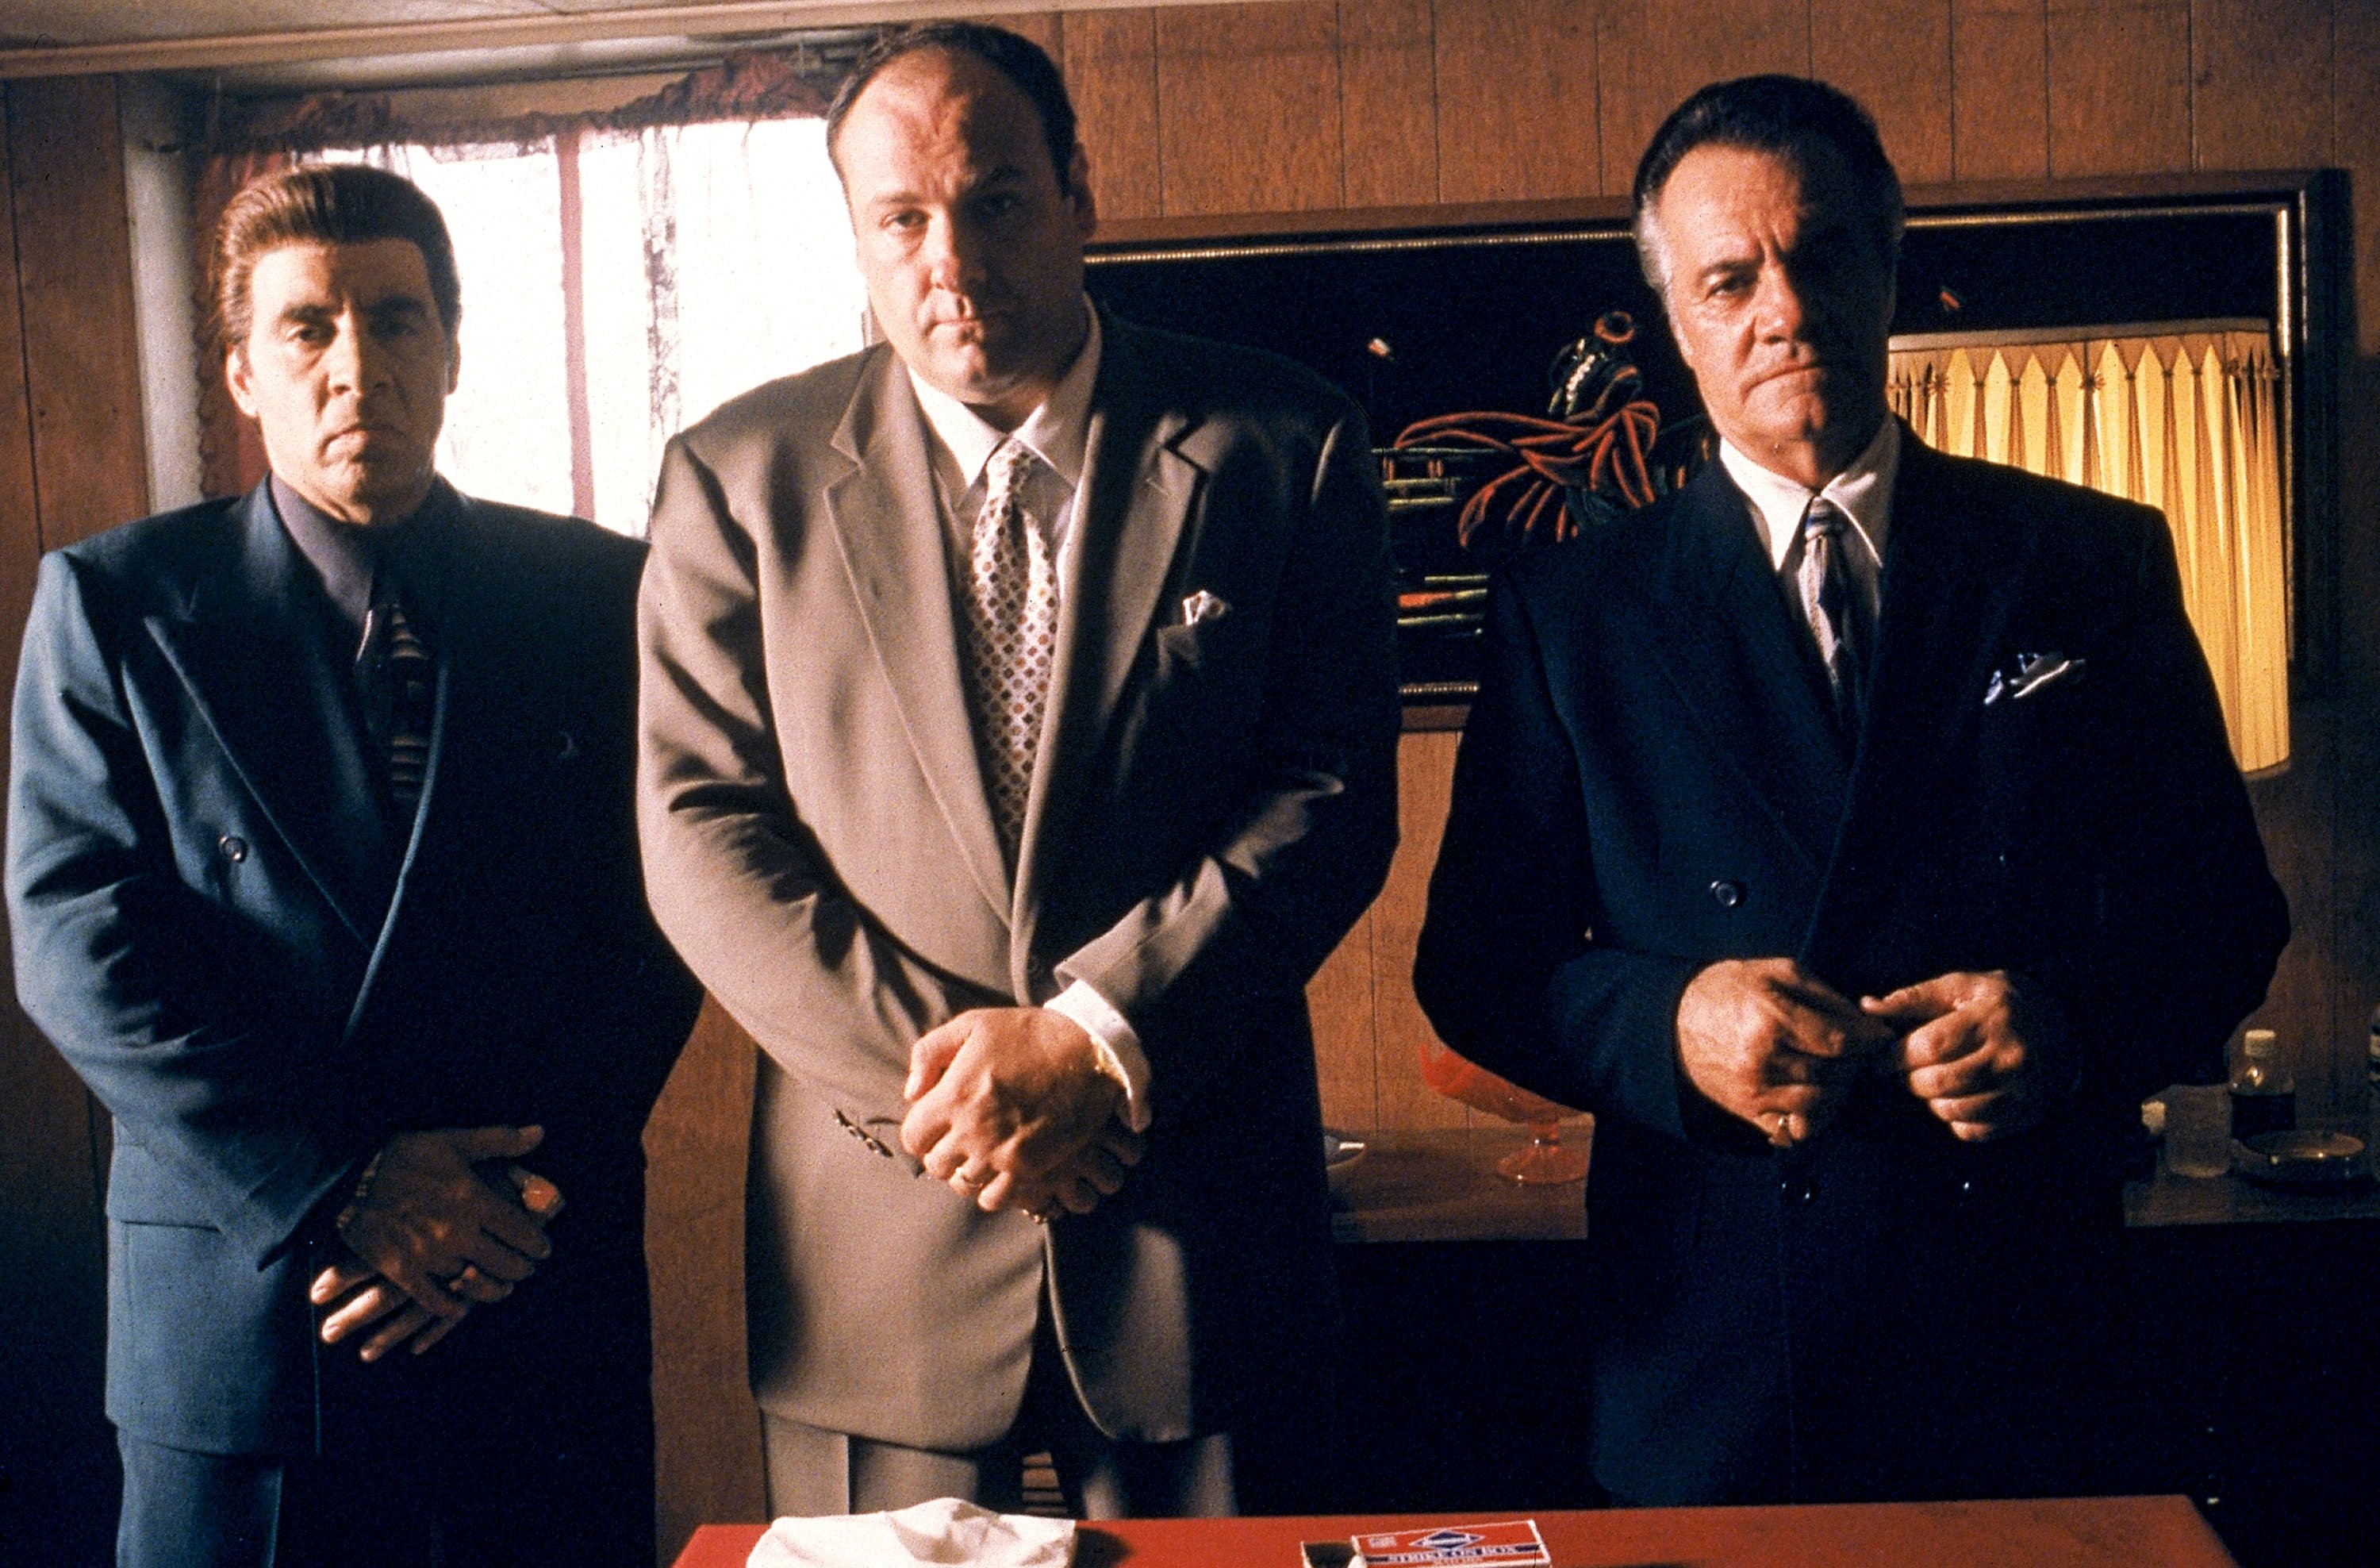 Steven Van Zandt as Silvio Dante, James Gandolfini as Tony Soprano, and Tony Sirico as Paulie Walnuts star in HBO's hit television series, "The Sopranos"